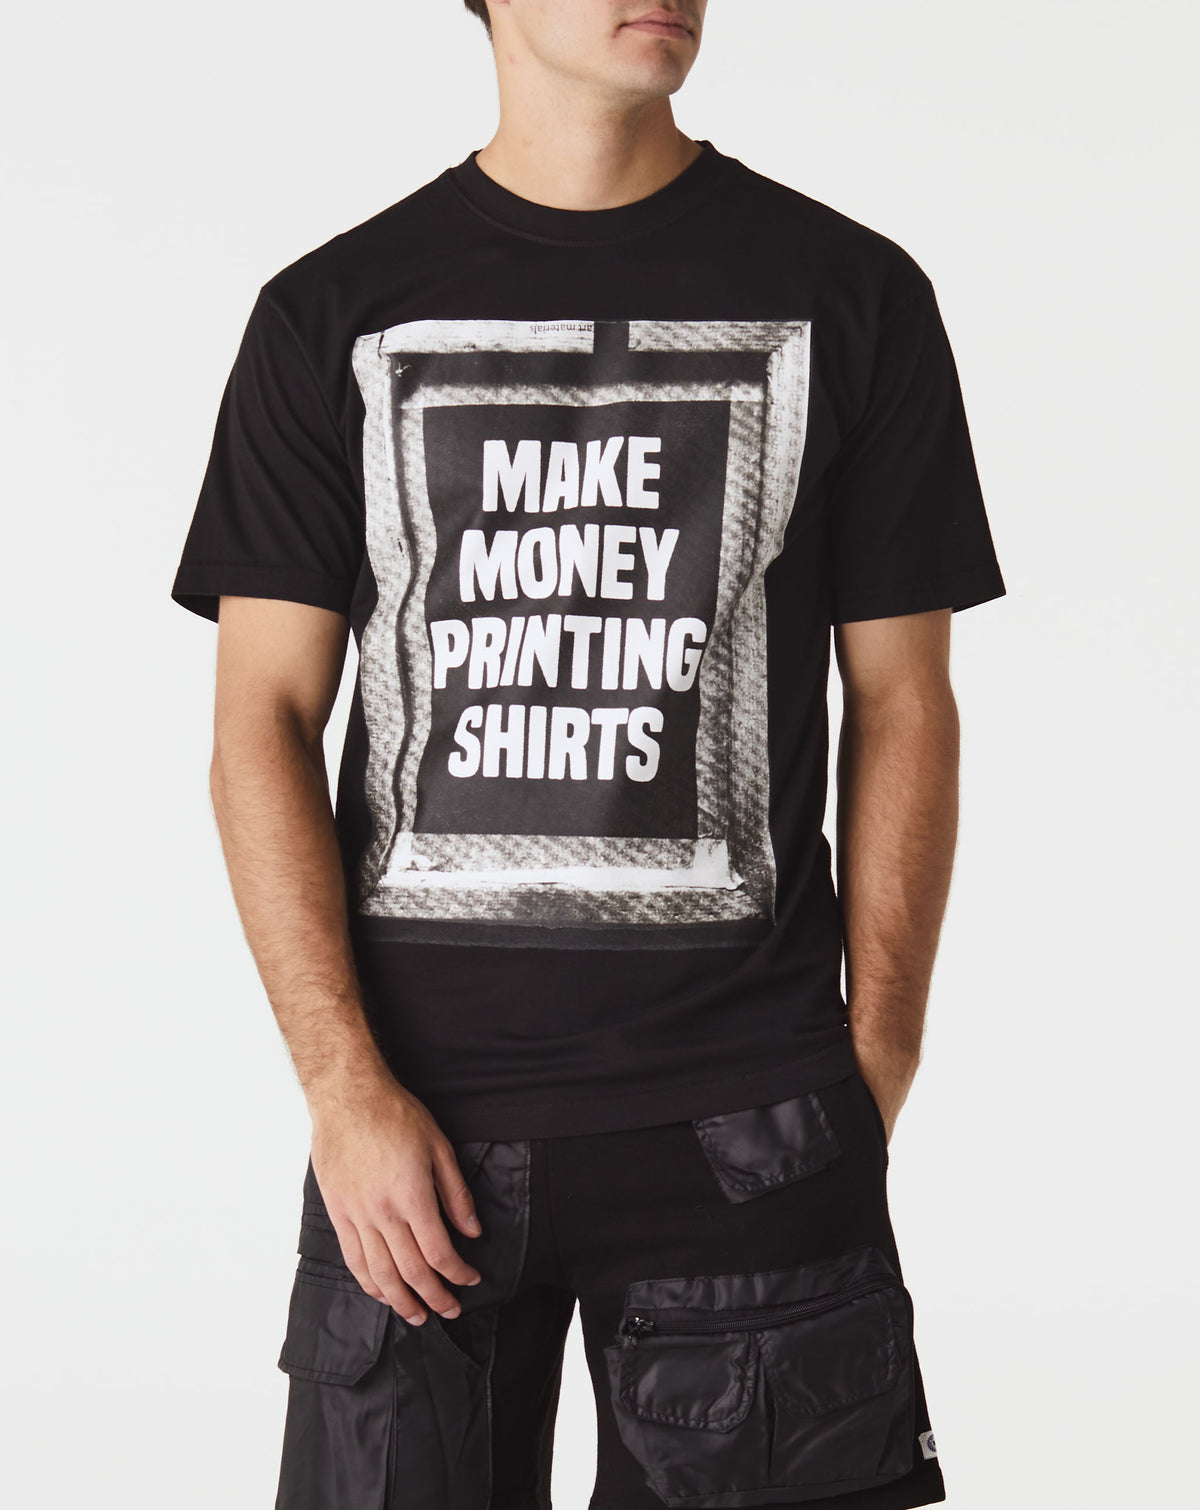 Market Printing Money T-Shirt - Rule of Next Apparel